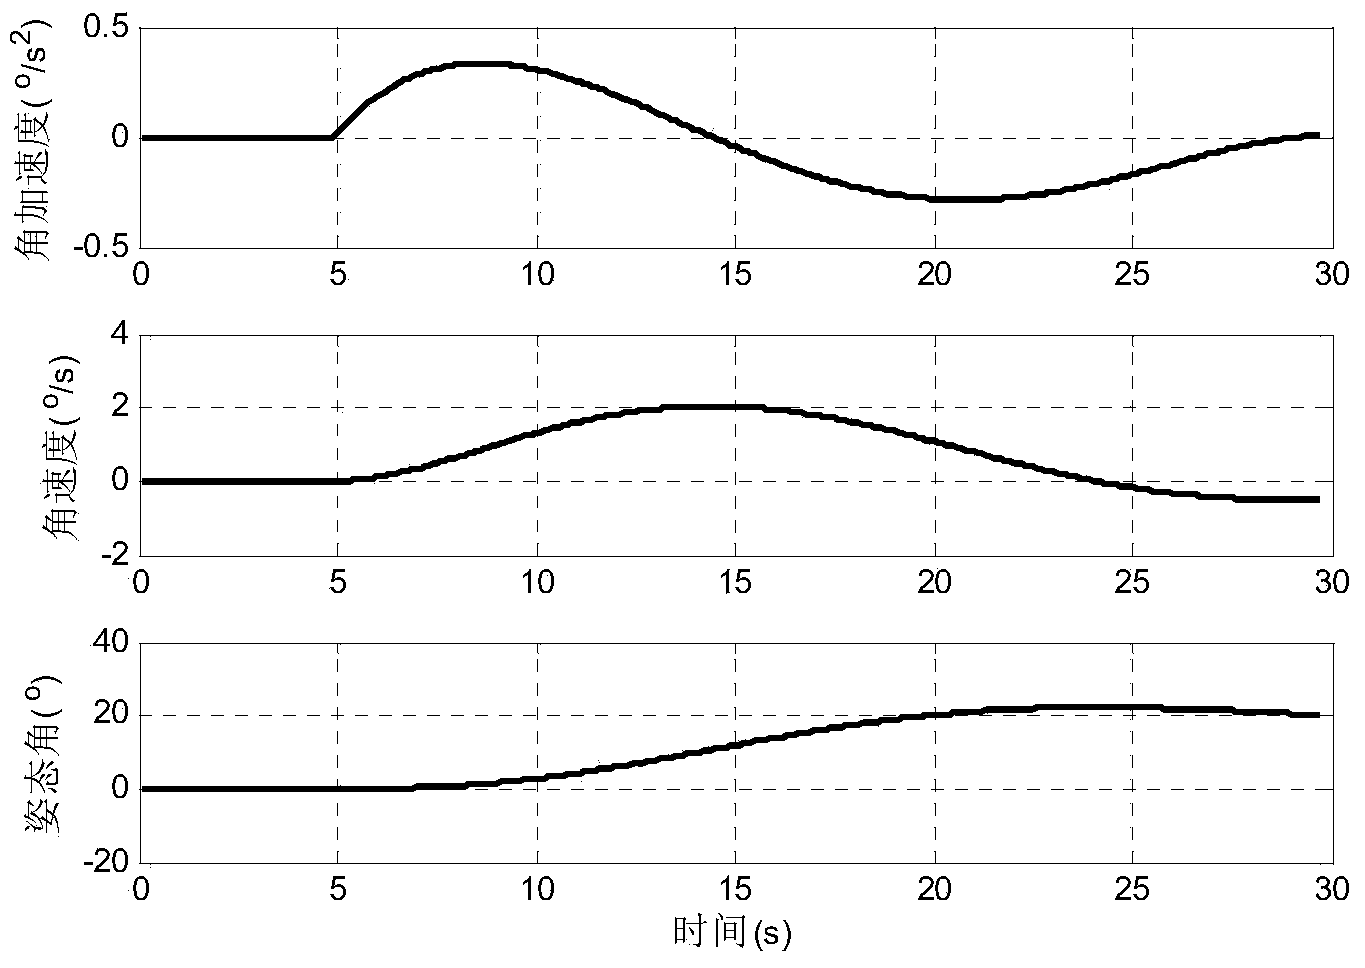 Satellite attitude maneuvering method based on polynomial